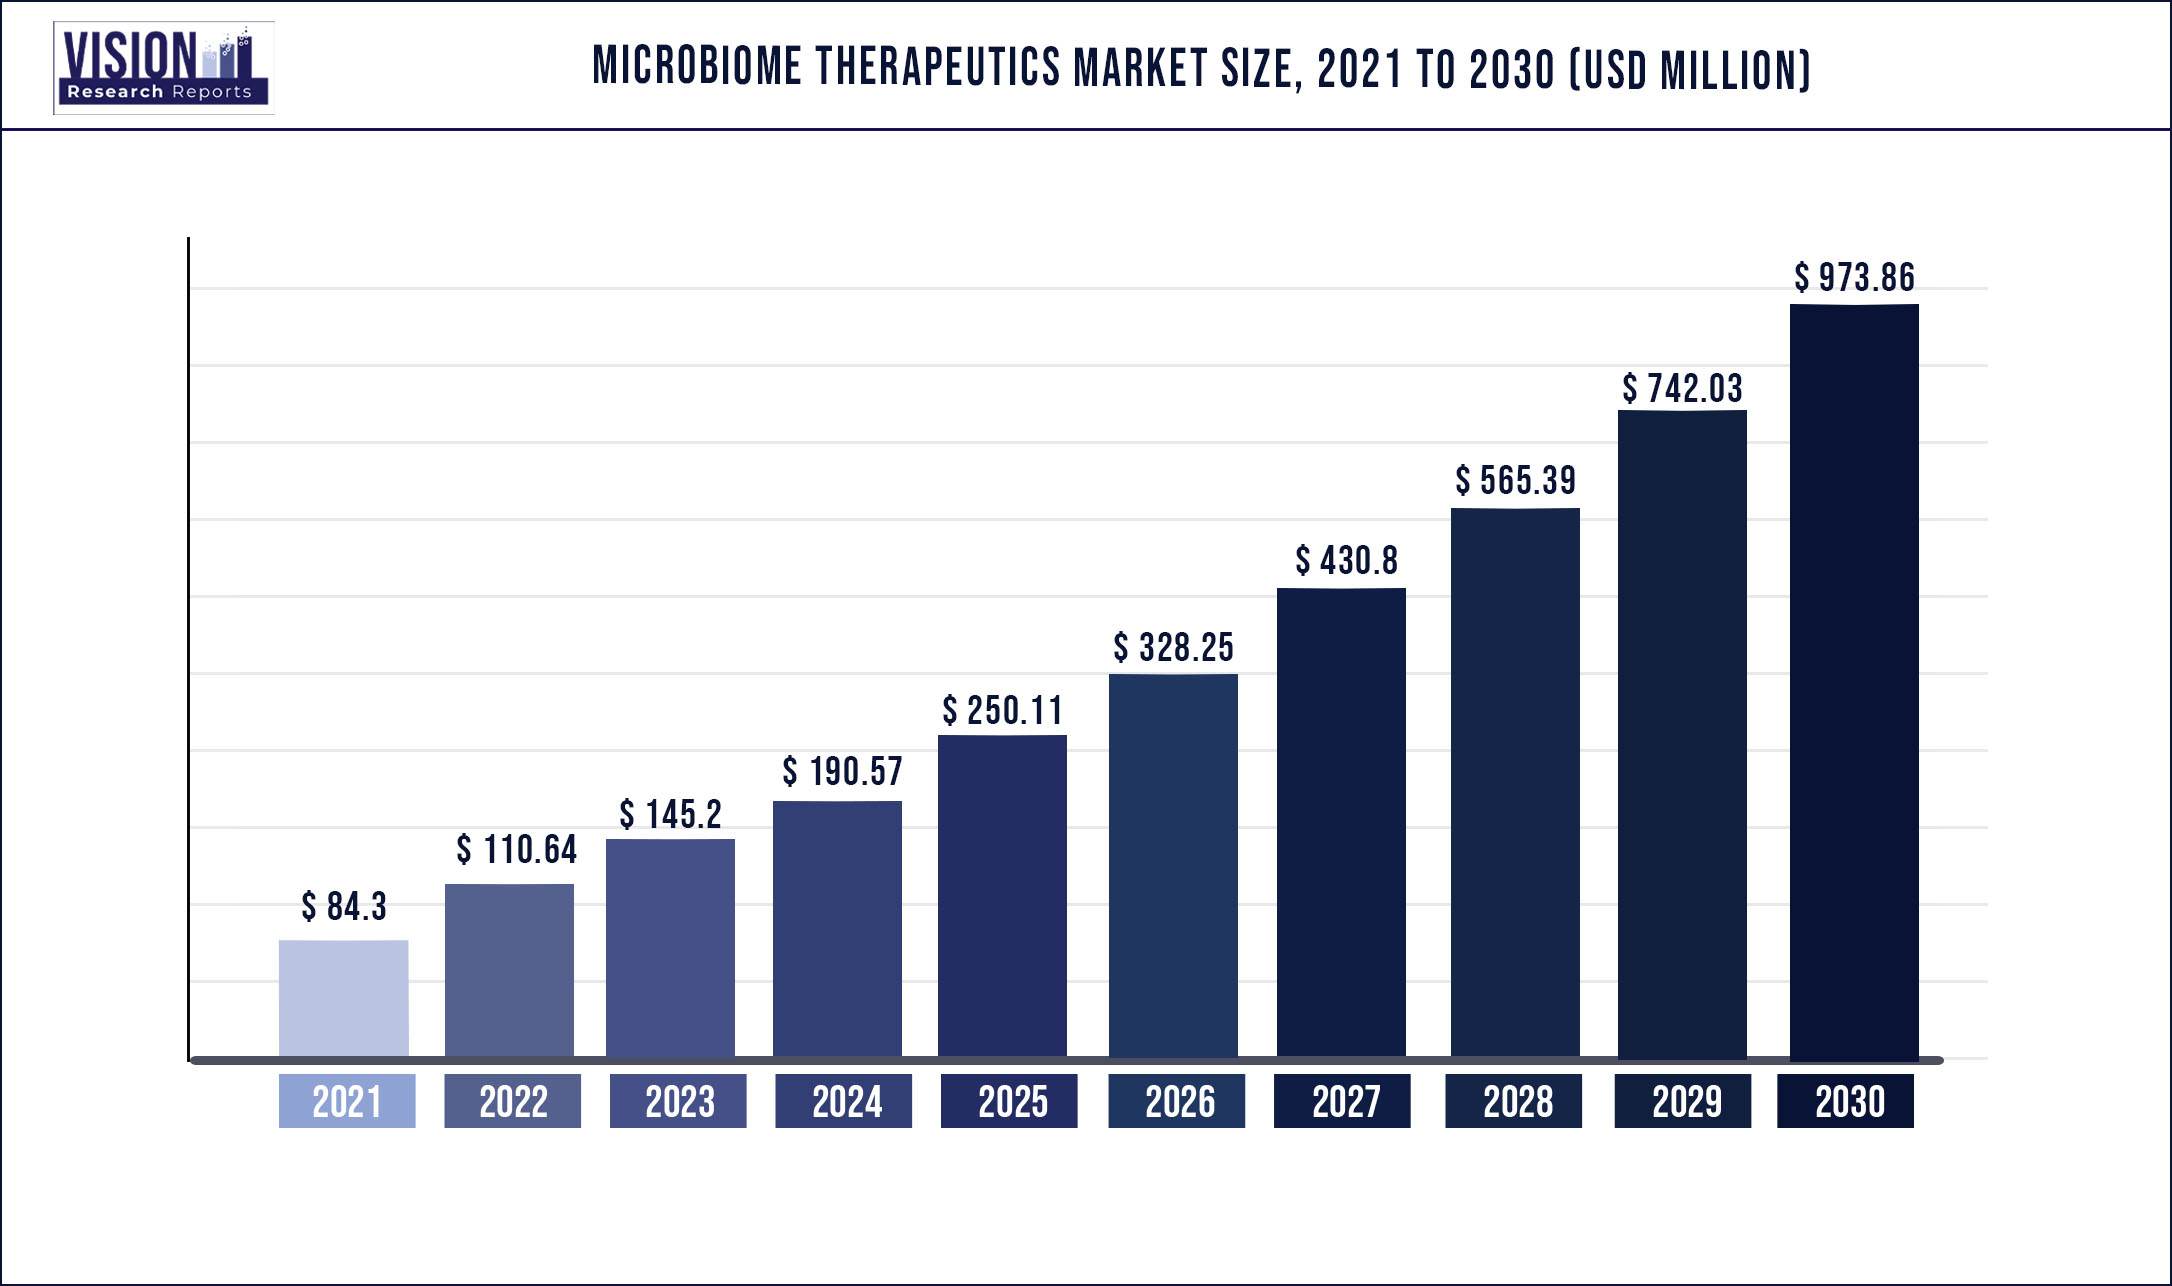 Microbiome Therapeutics Market Size 2021 to 2030